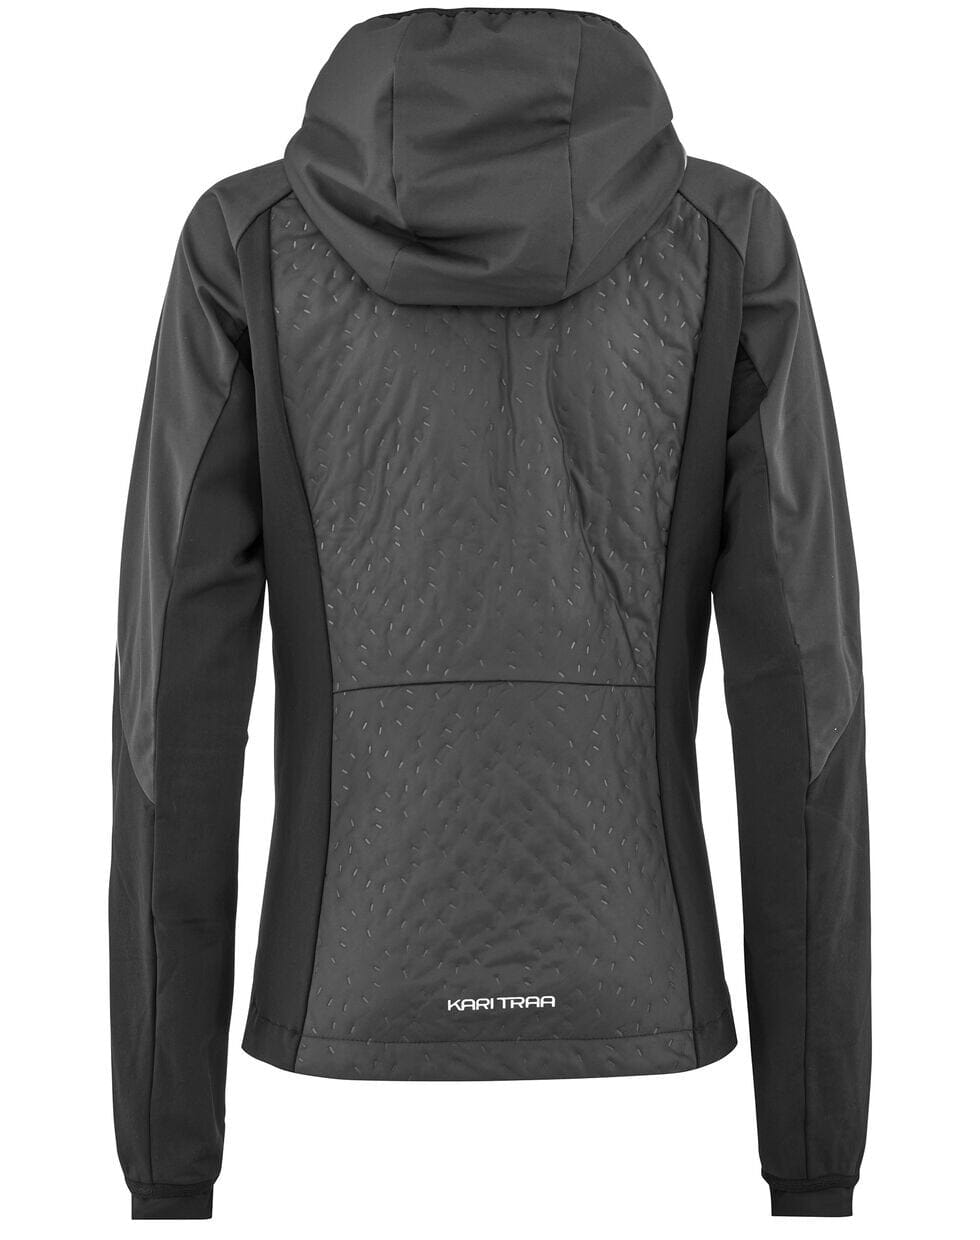 Kari Traa - W's Tirill 2.0 Jacket - Recycled Polyester - Weekendbee - sustainable sportswear